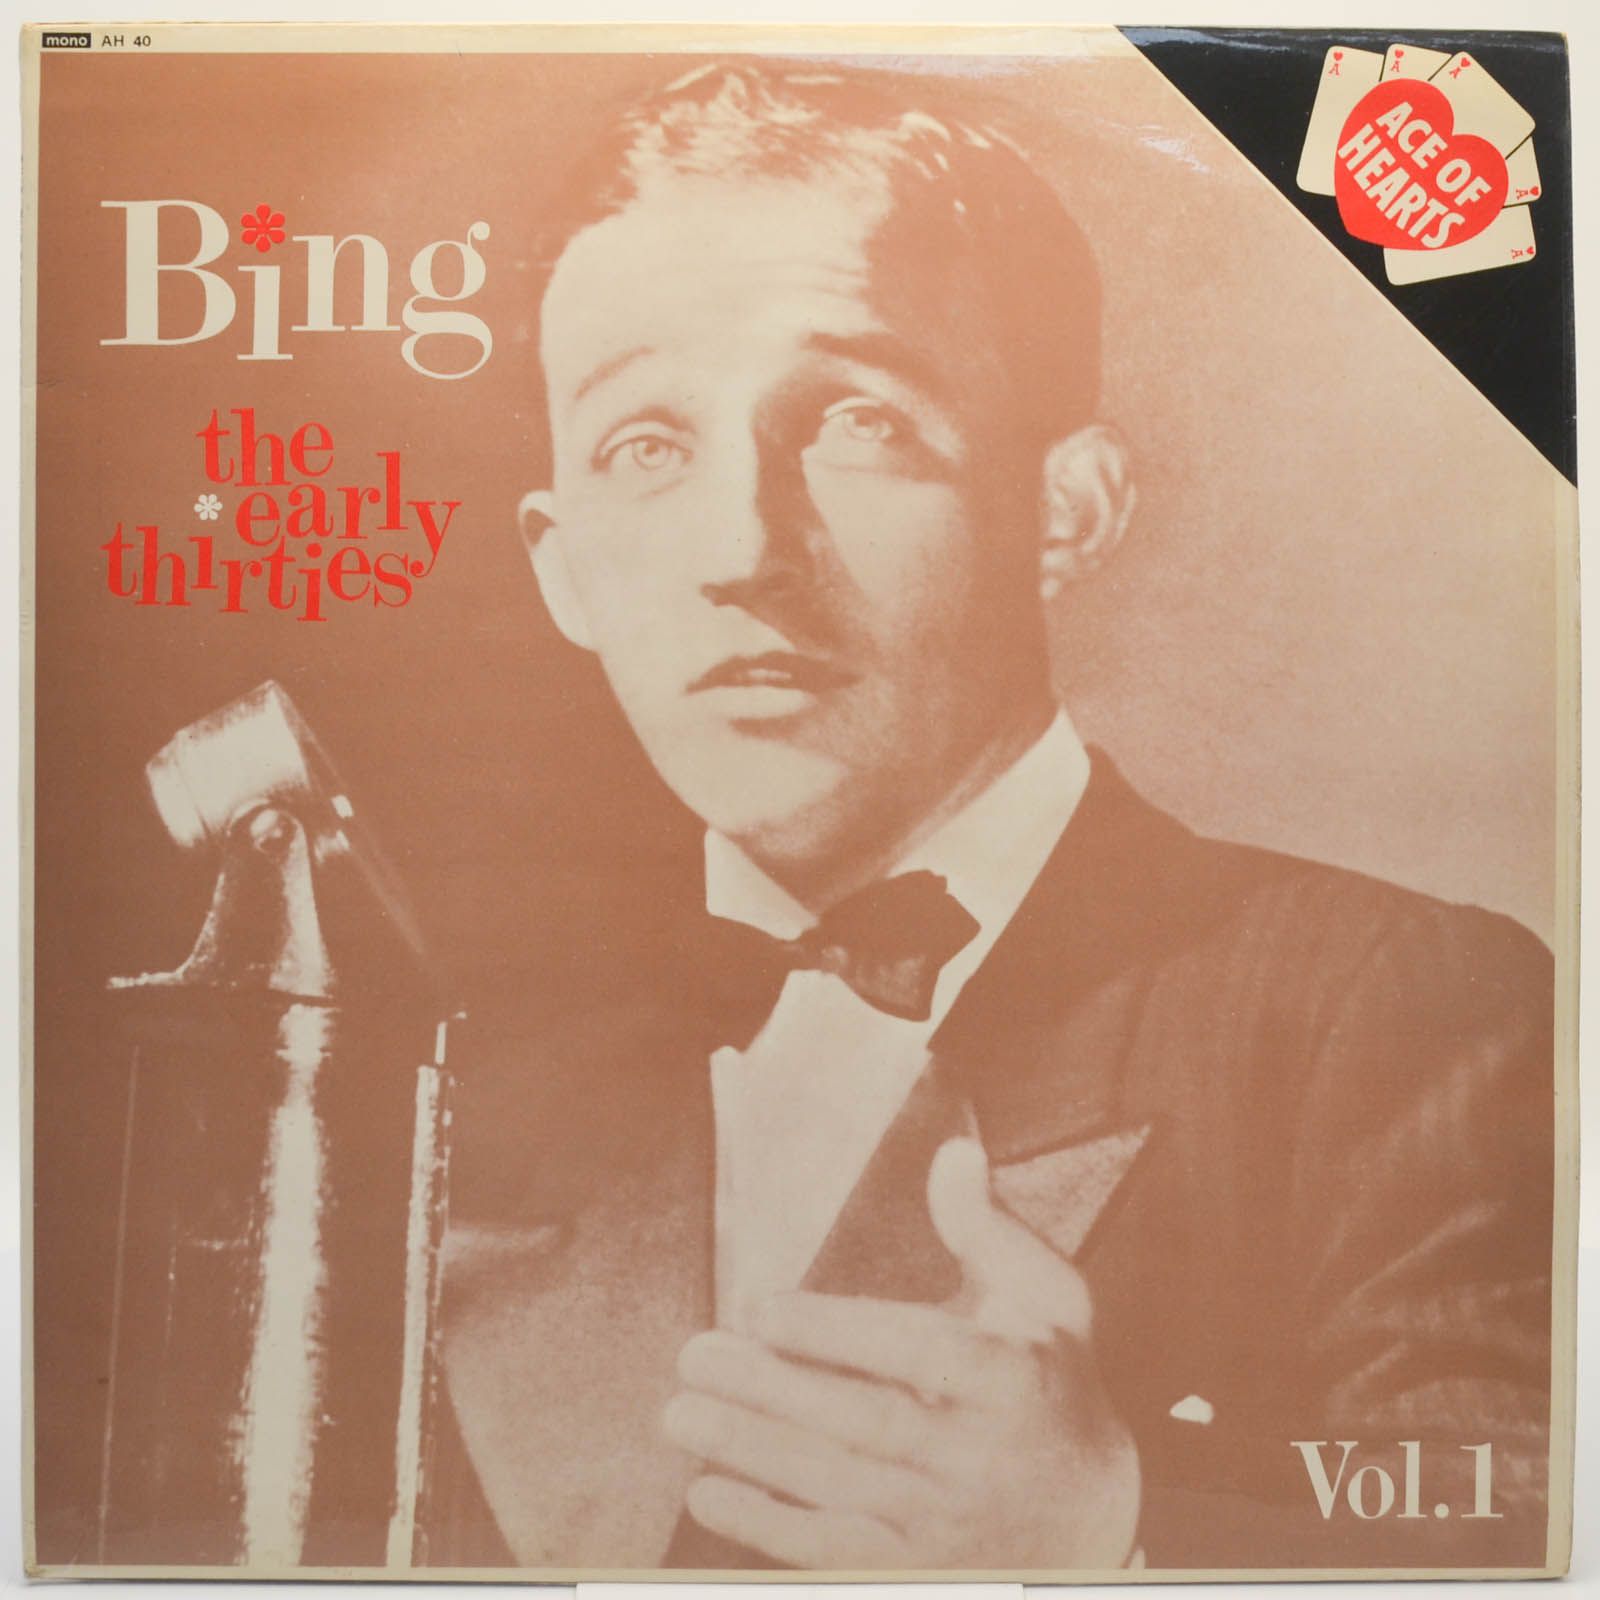 Bing — The Early Thirties, Volume 1 (UK), 1962